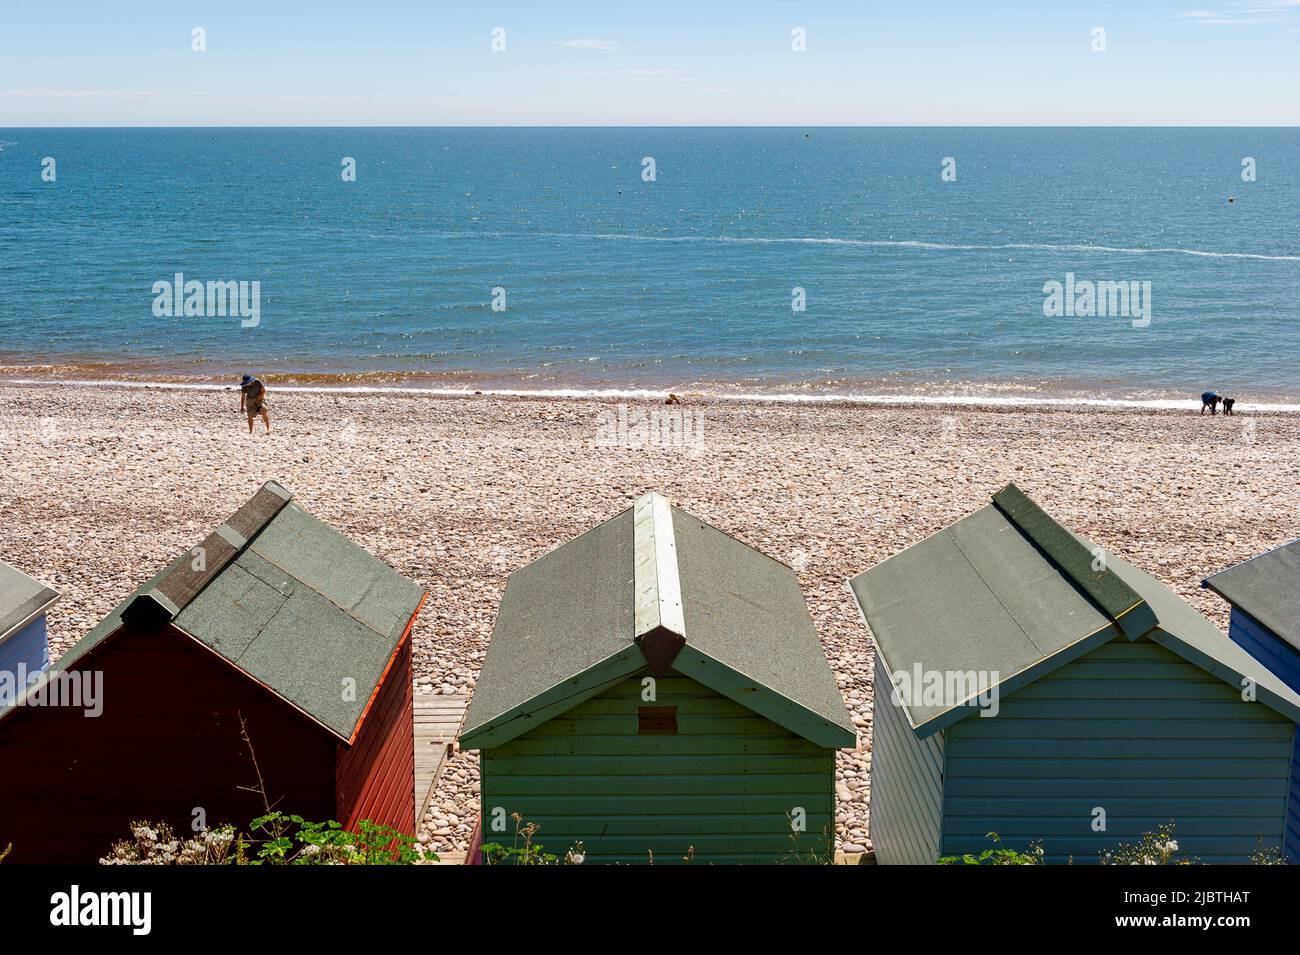 Beach Huts On The Beach At Budleigh Salterton Devon England Stock Photo Alamy